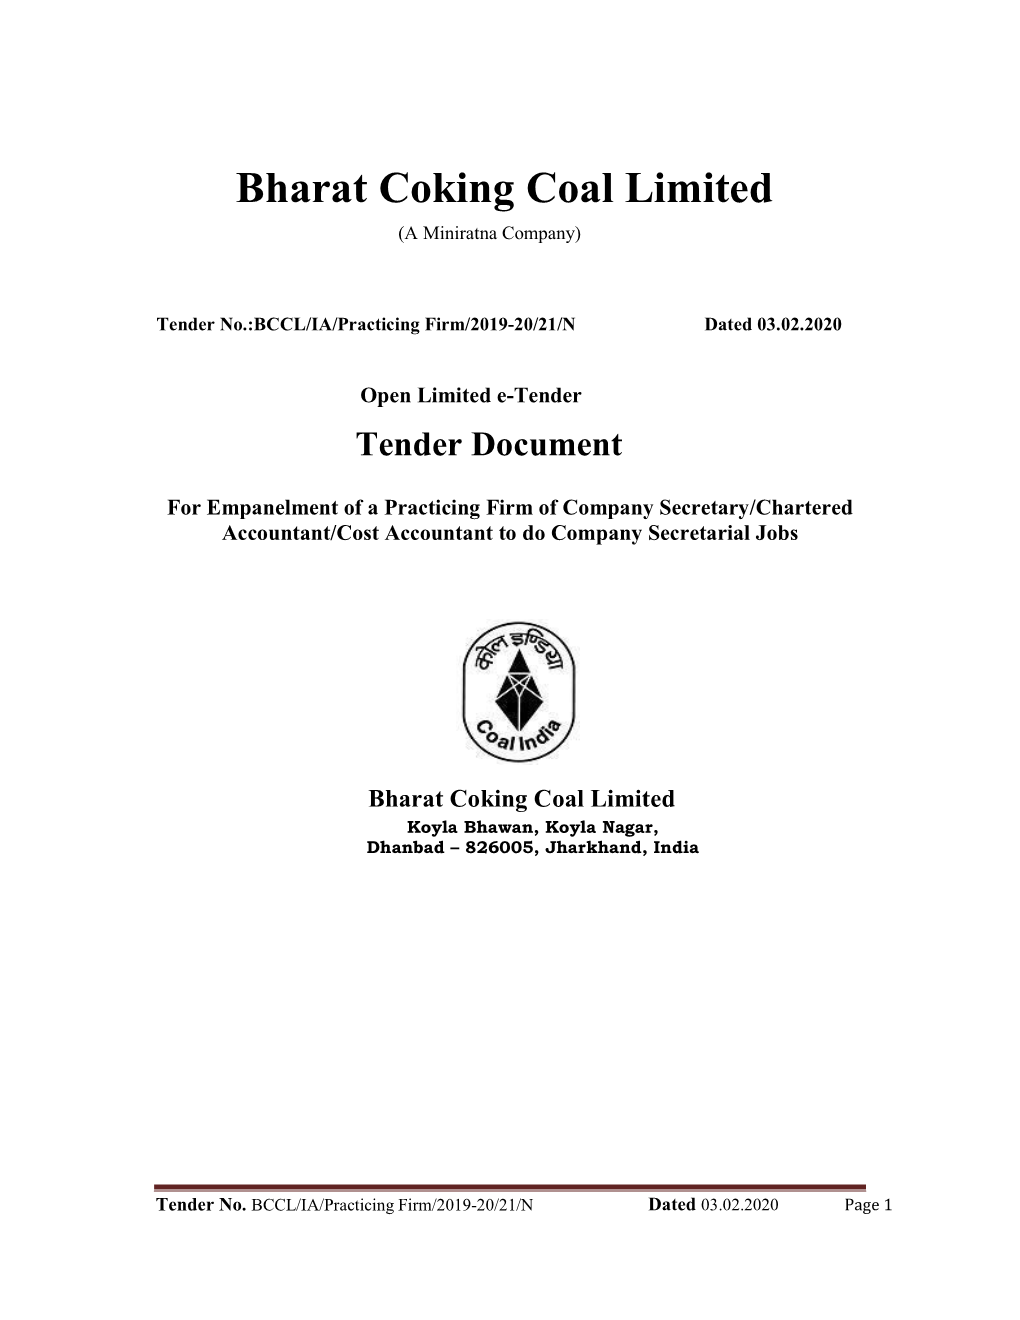 Bharat Coking Coal Limited (A Miniratna Company)